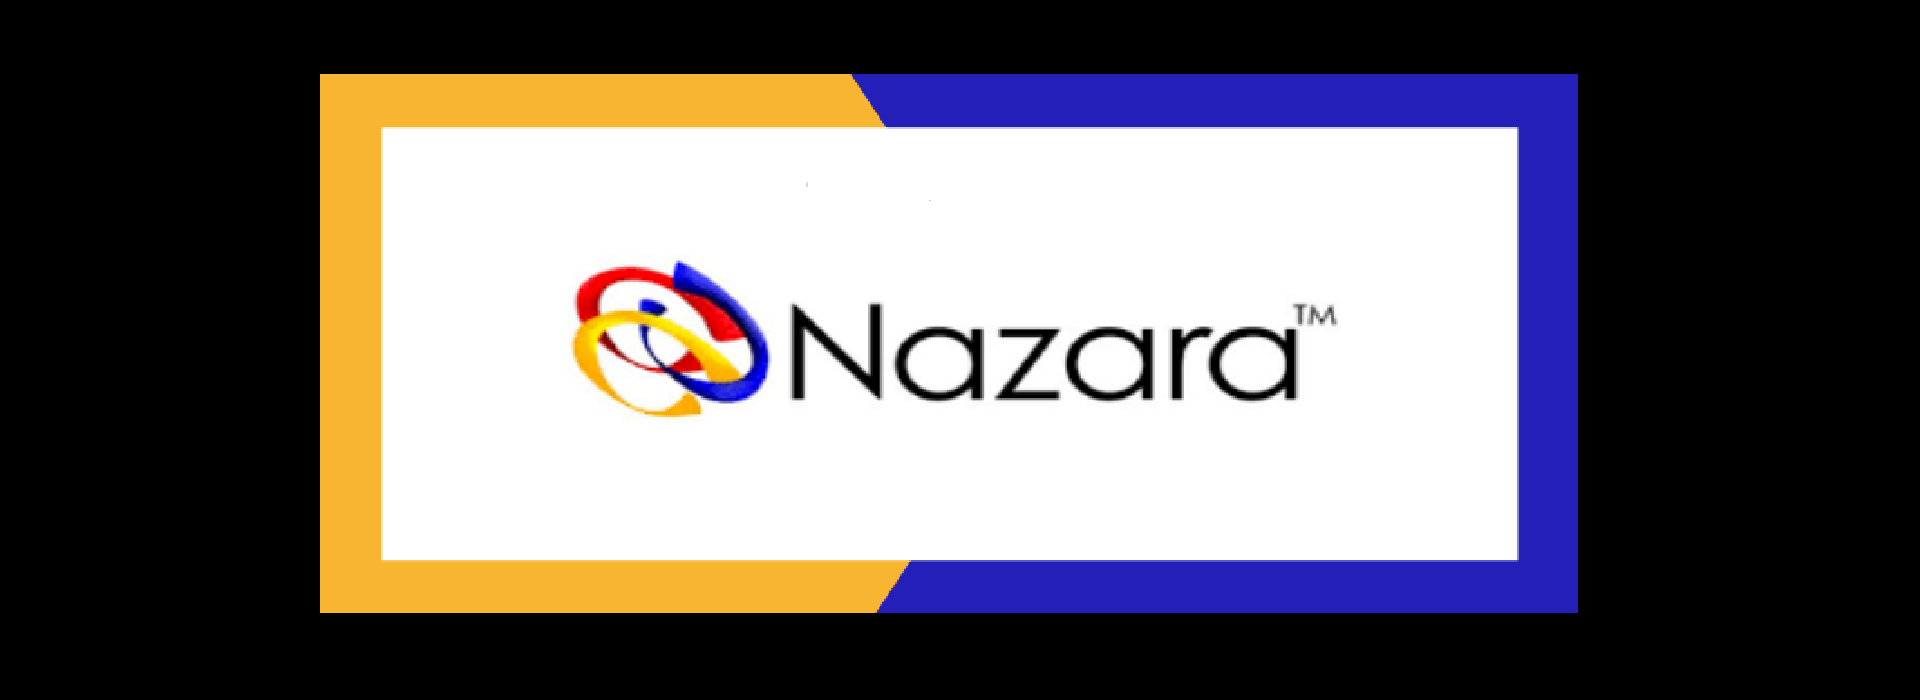 Nazara Technologies financials